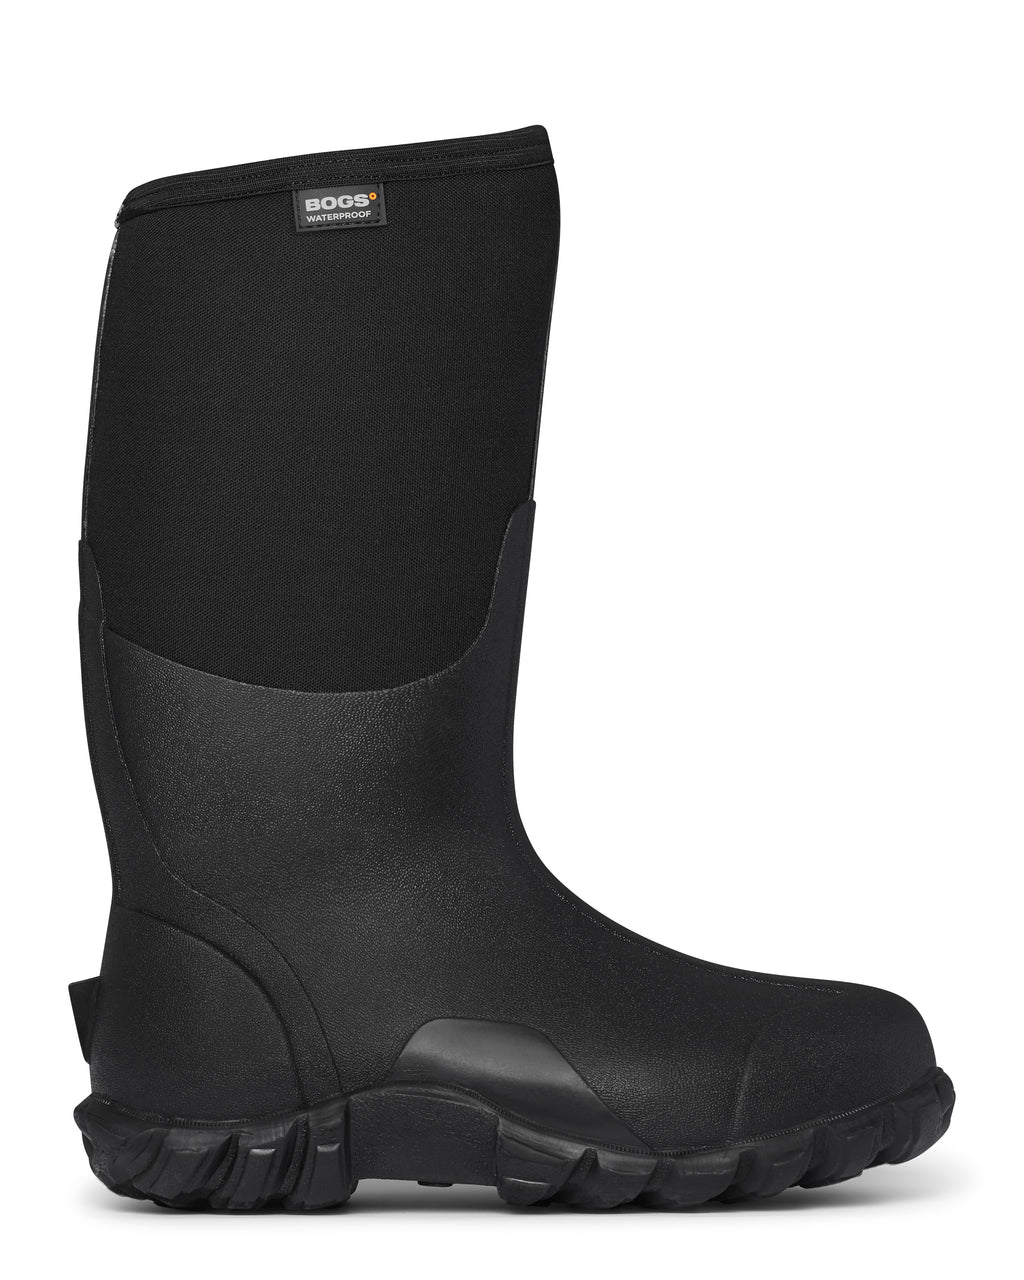 BOGS Men's Classic High Boot. 100% Waterproof Boots.